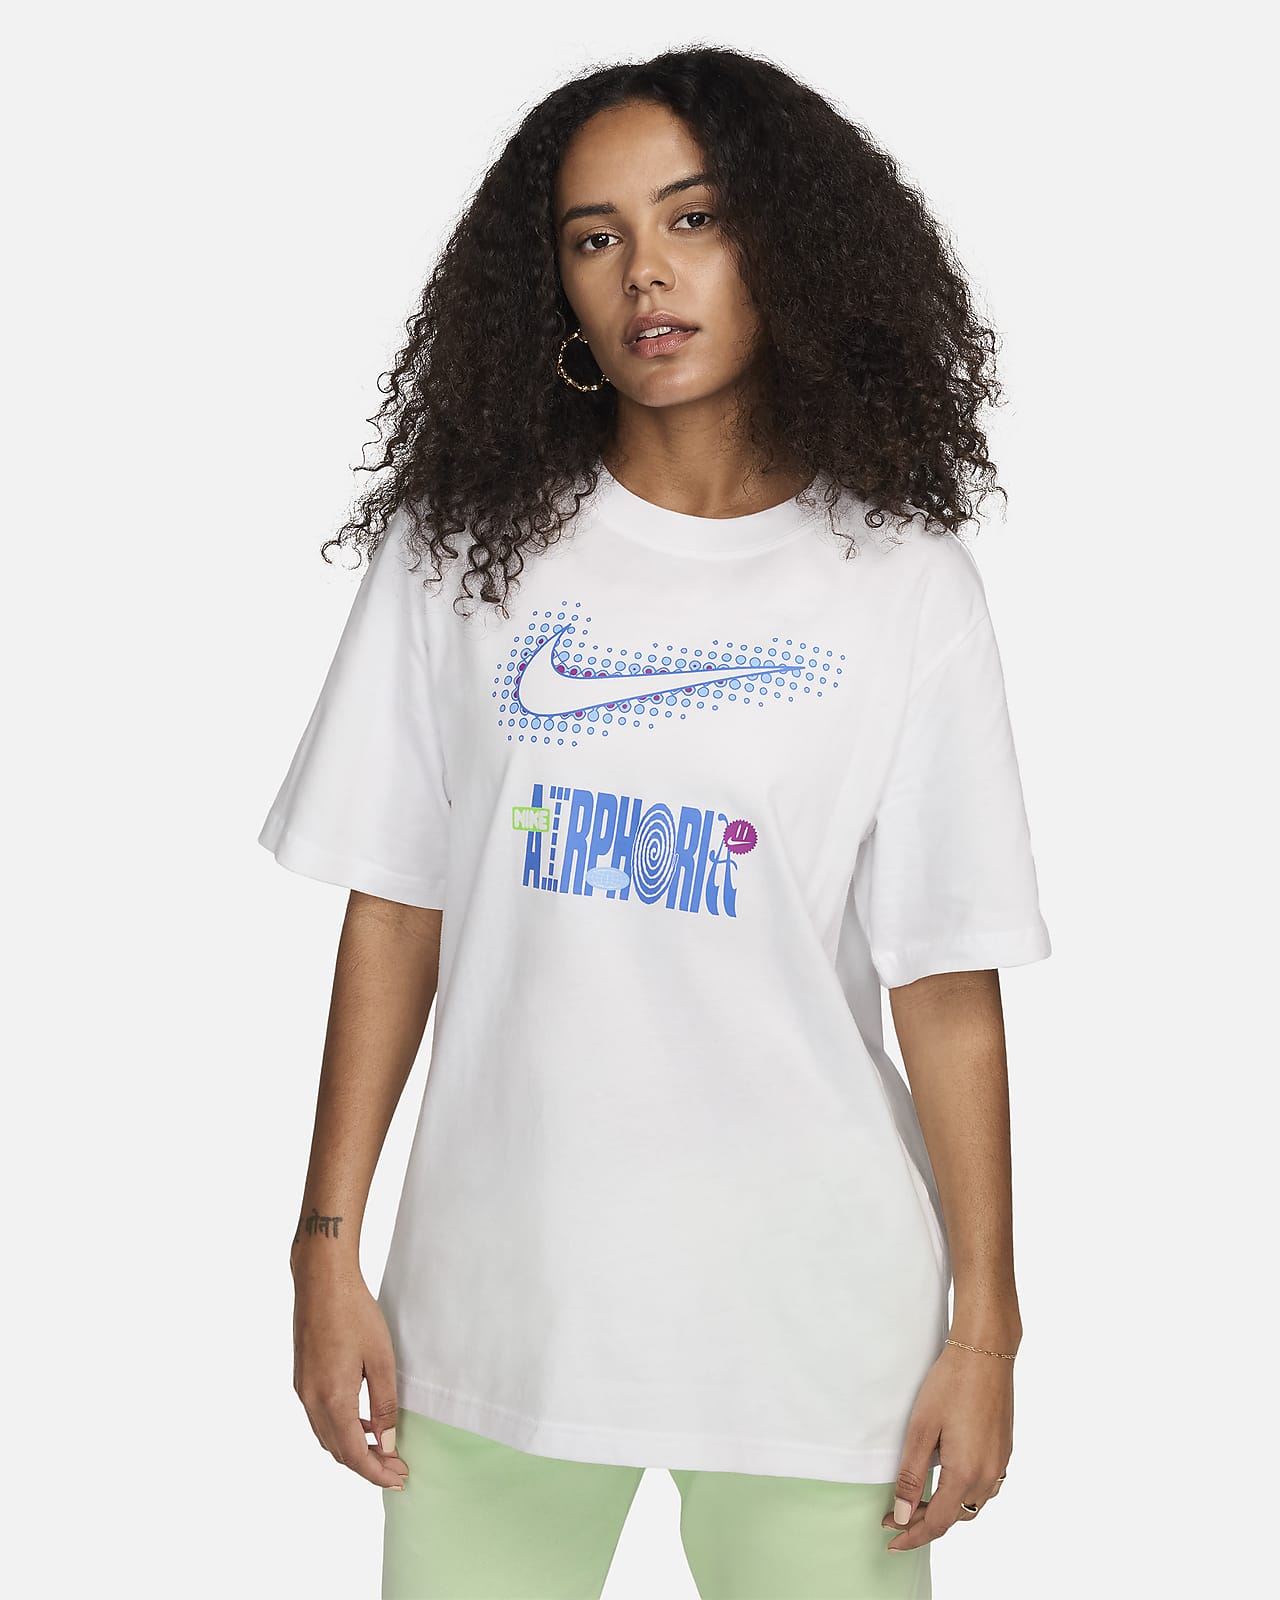 Dámské tričko Nike Sportswear s potiskem